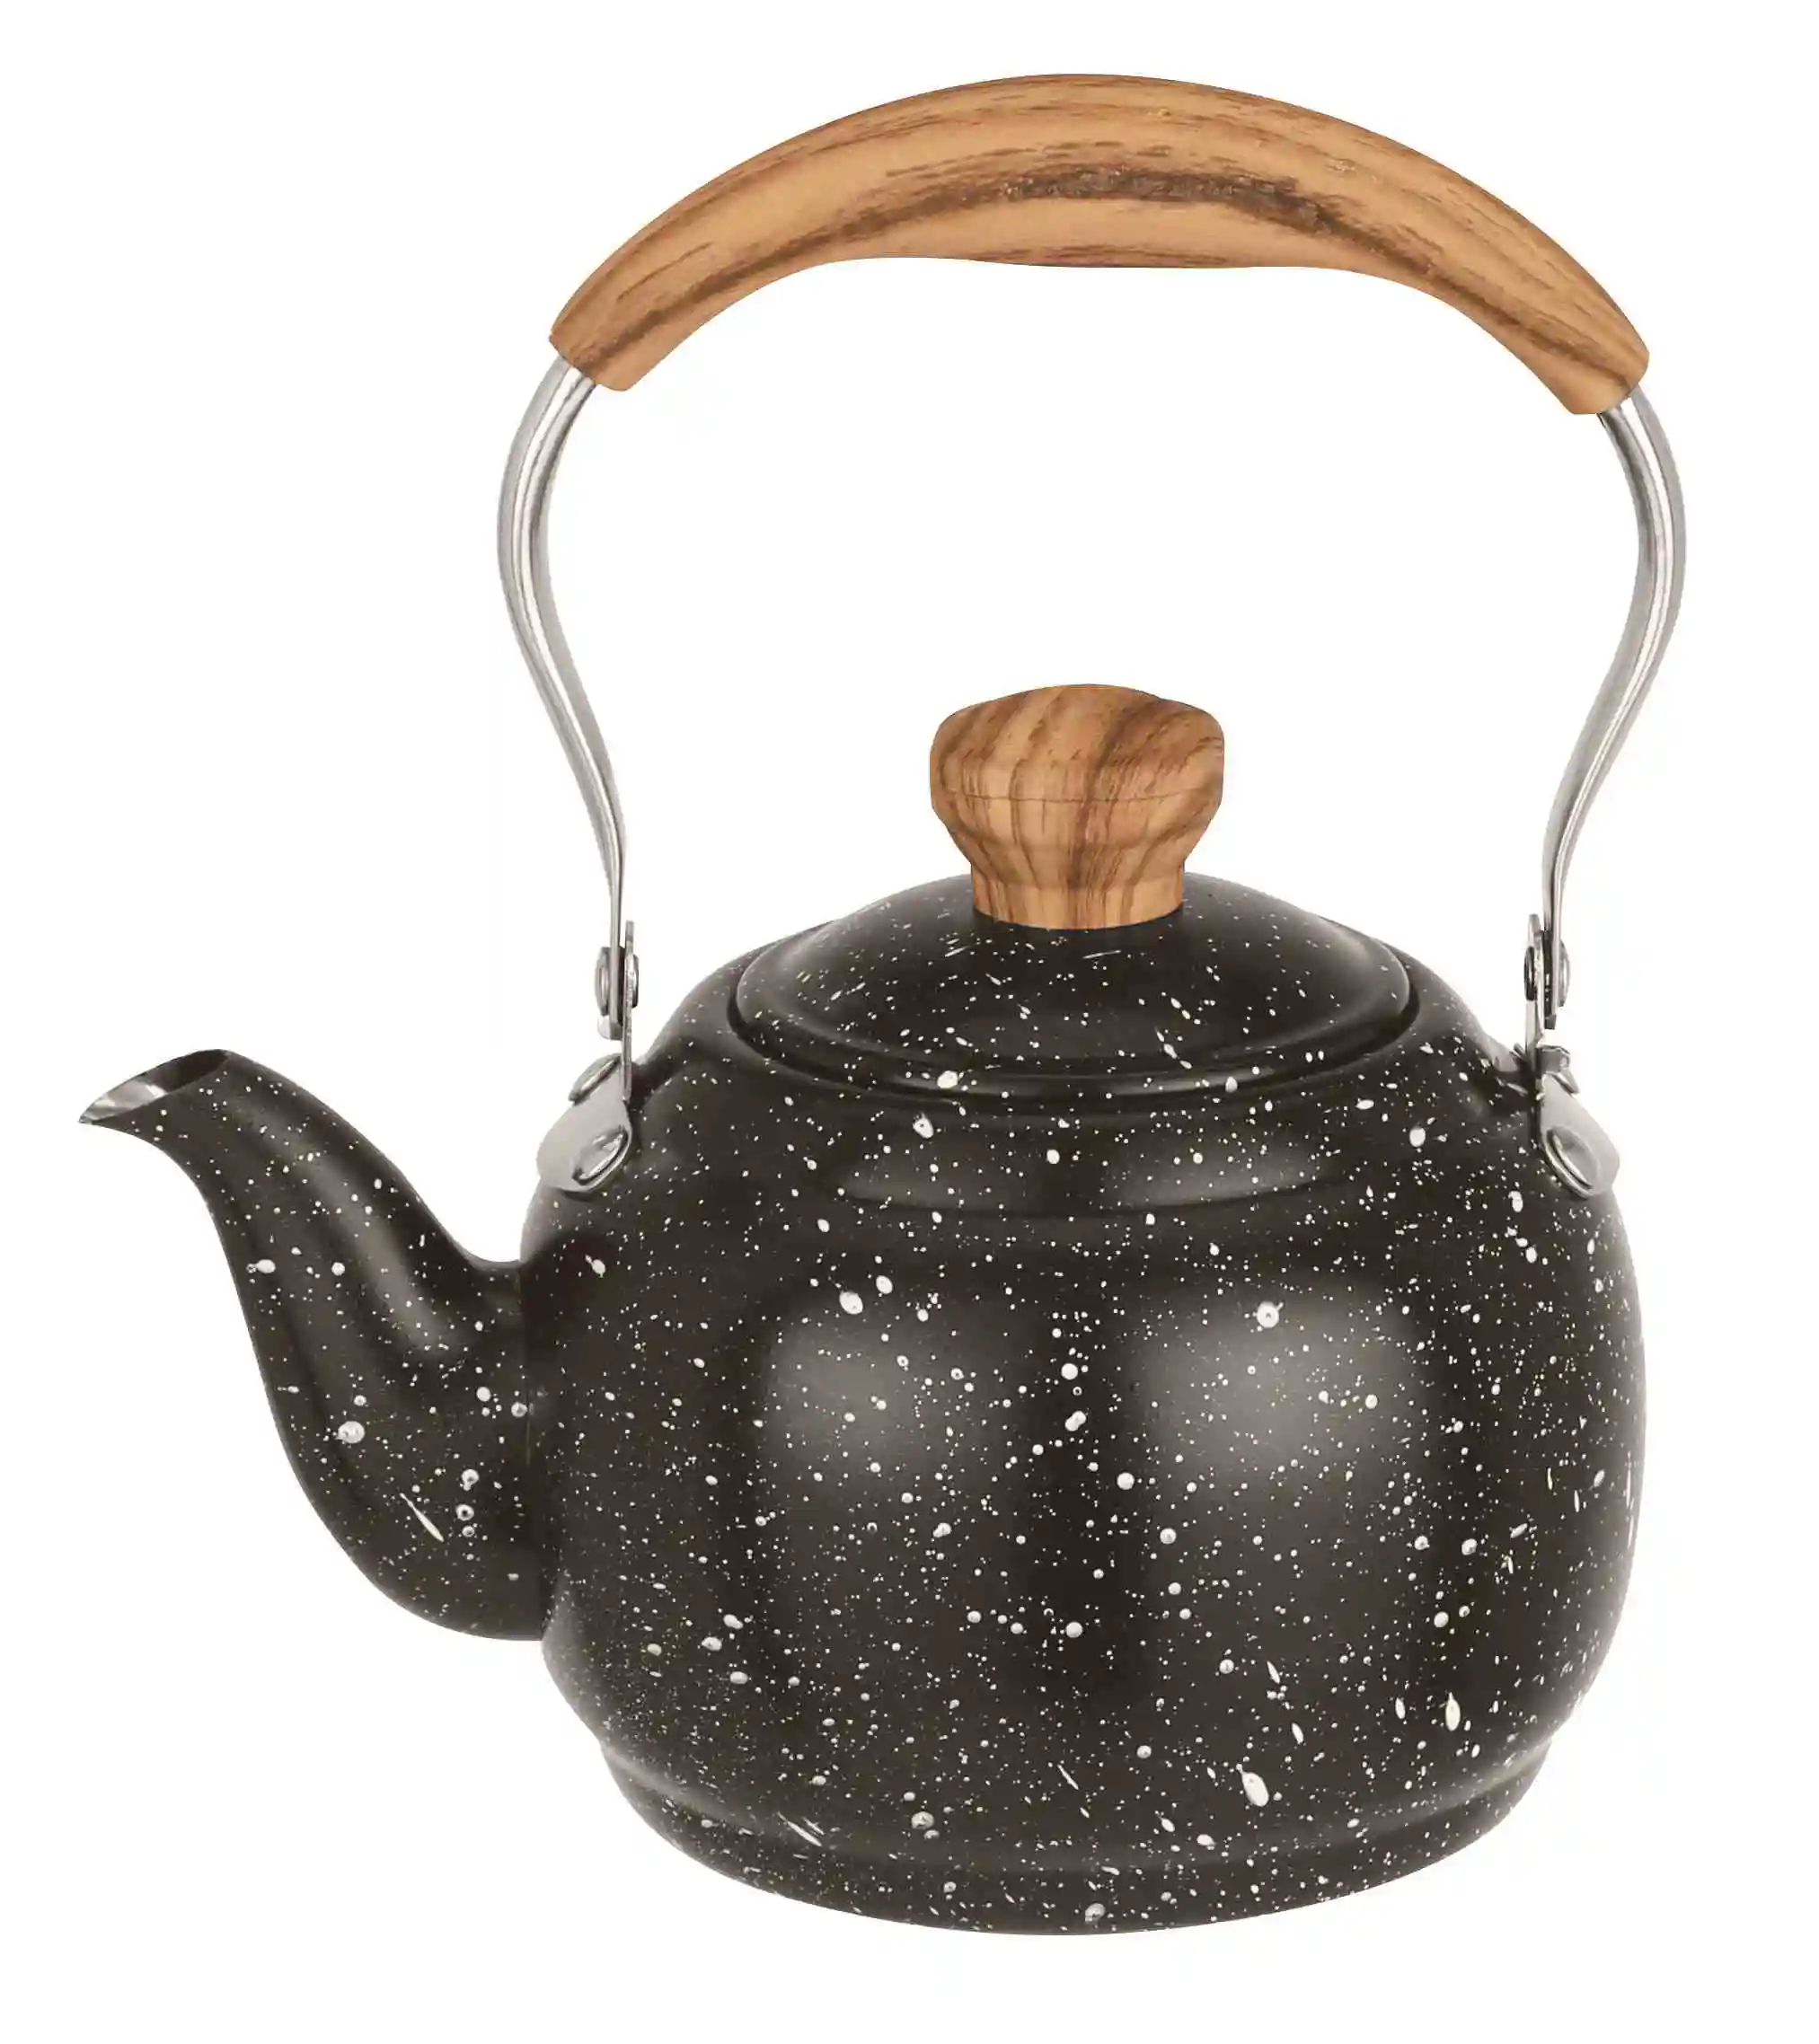 P22201B19-1 Turkish Double Tea Pot Kettle Set Insulated Tea Pot Stainless Steel With Infuser turkish double tea pot kettle set